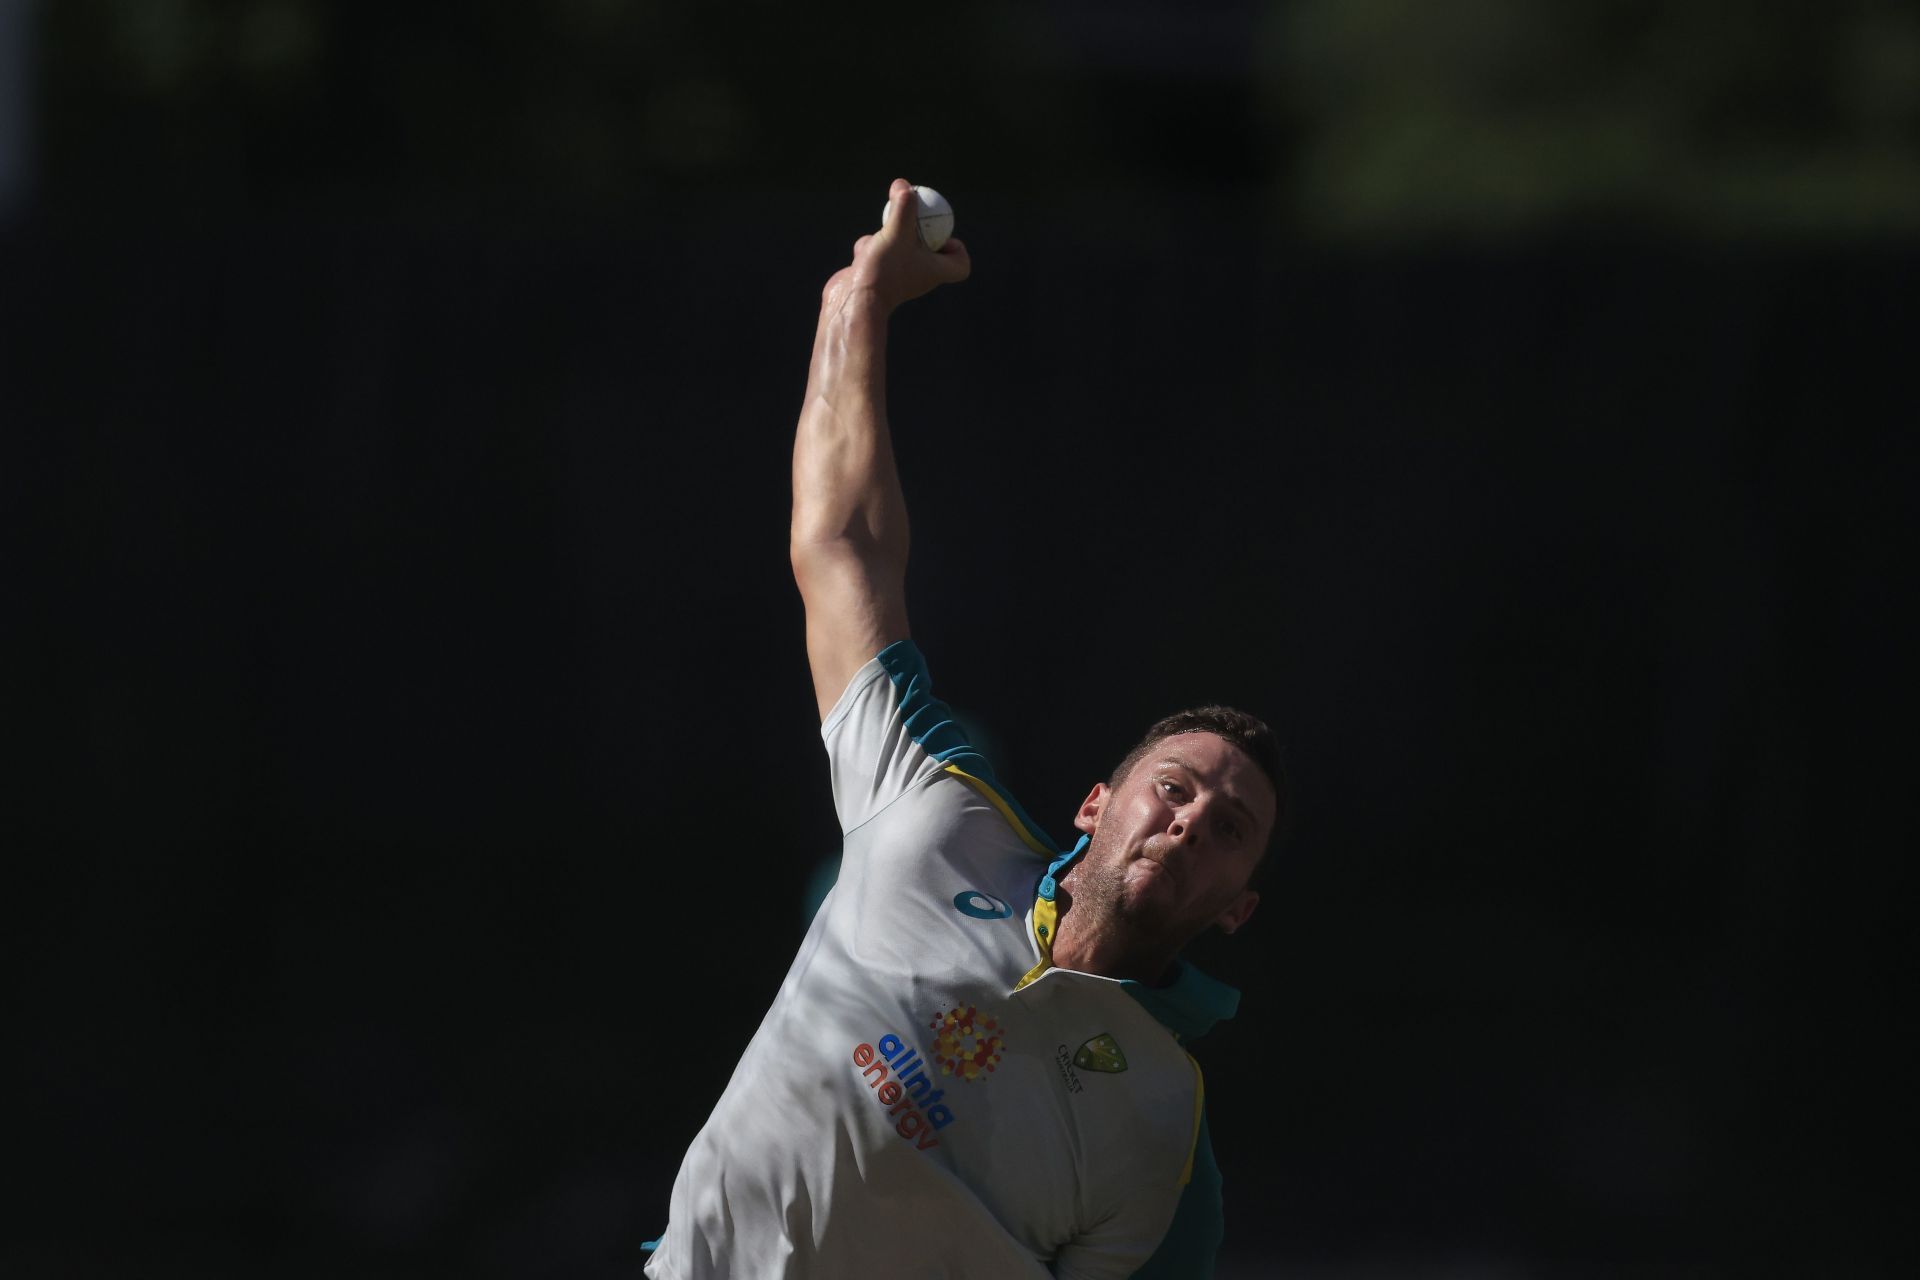 Australian bowler Josh Hazlewood has been very effective this season for his IPL team